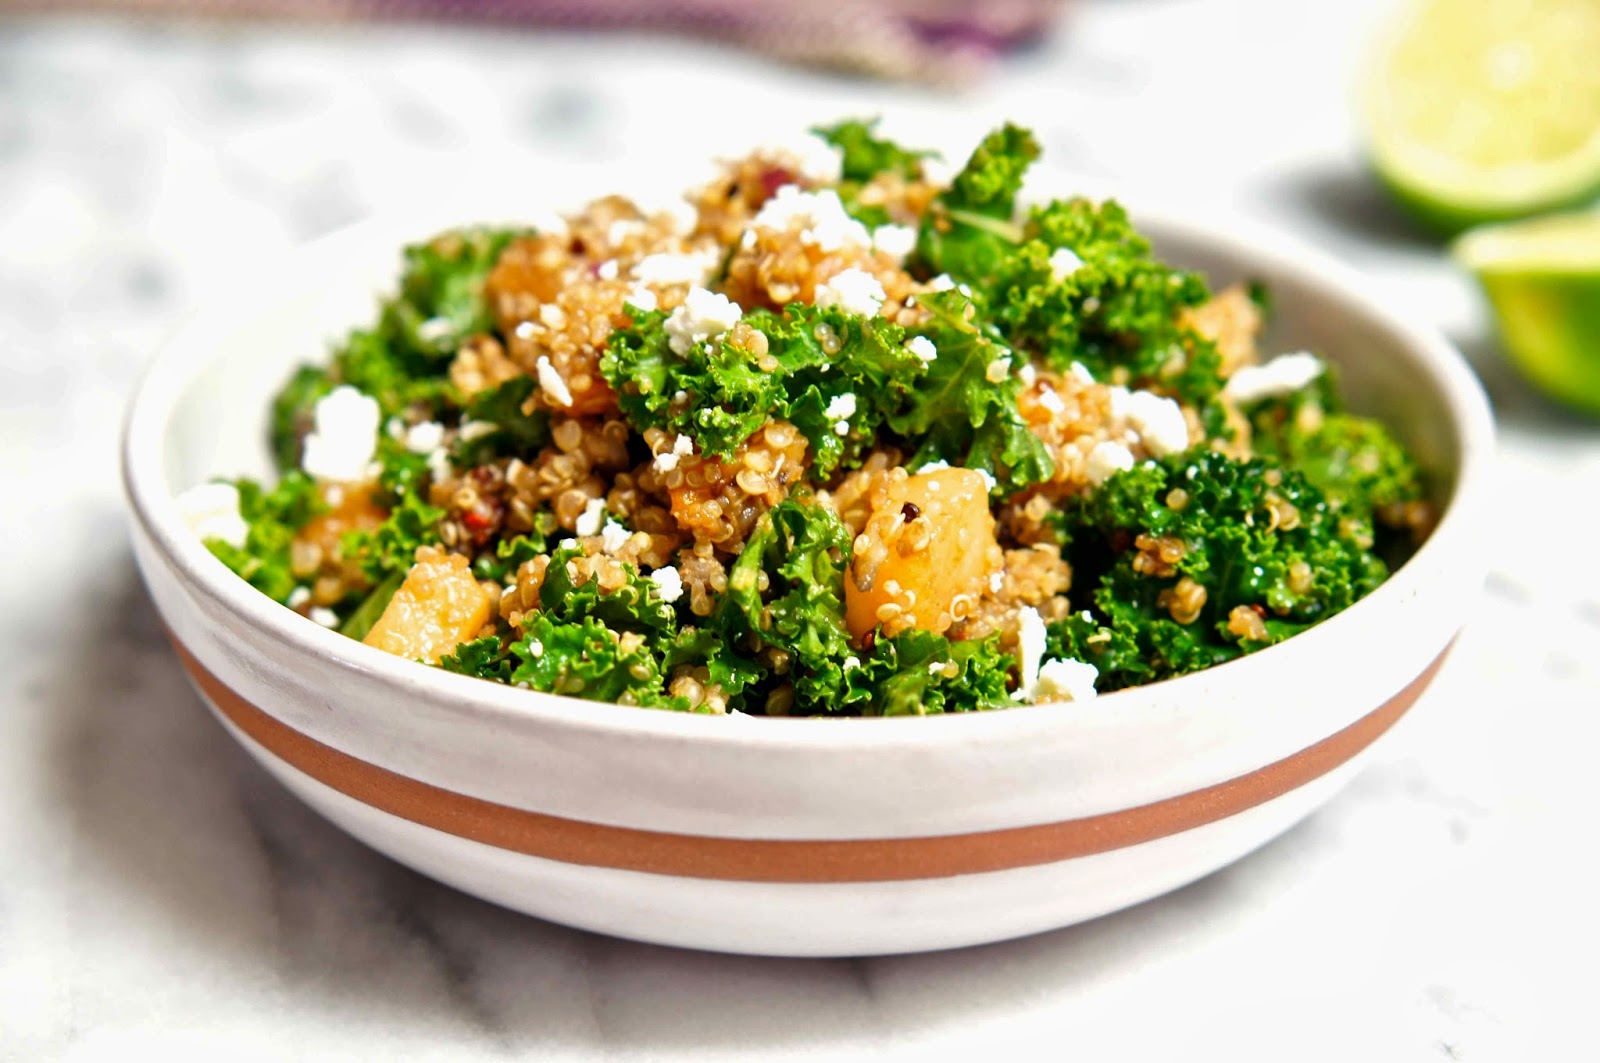 http://newmoontx.blogspot.com/2014/03/cantaloupe-kale-quinoa-salad.html